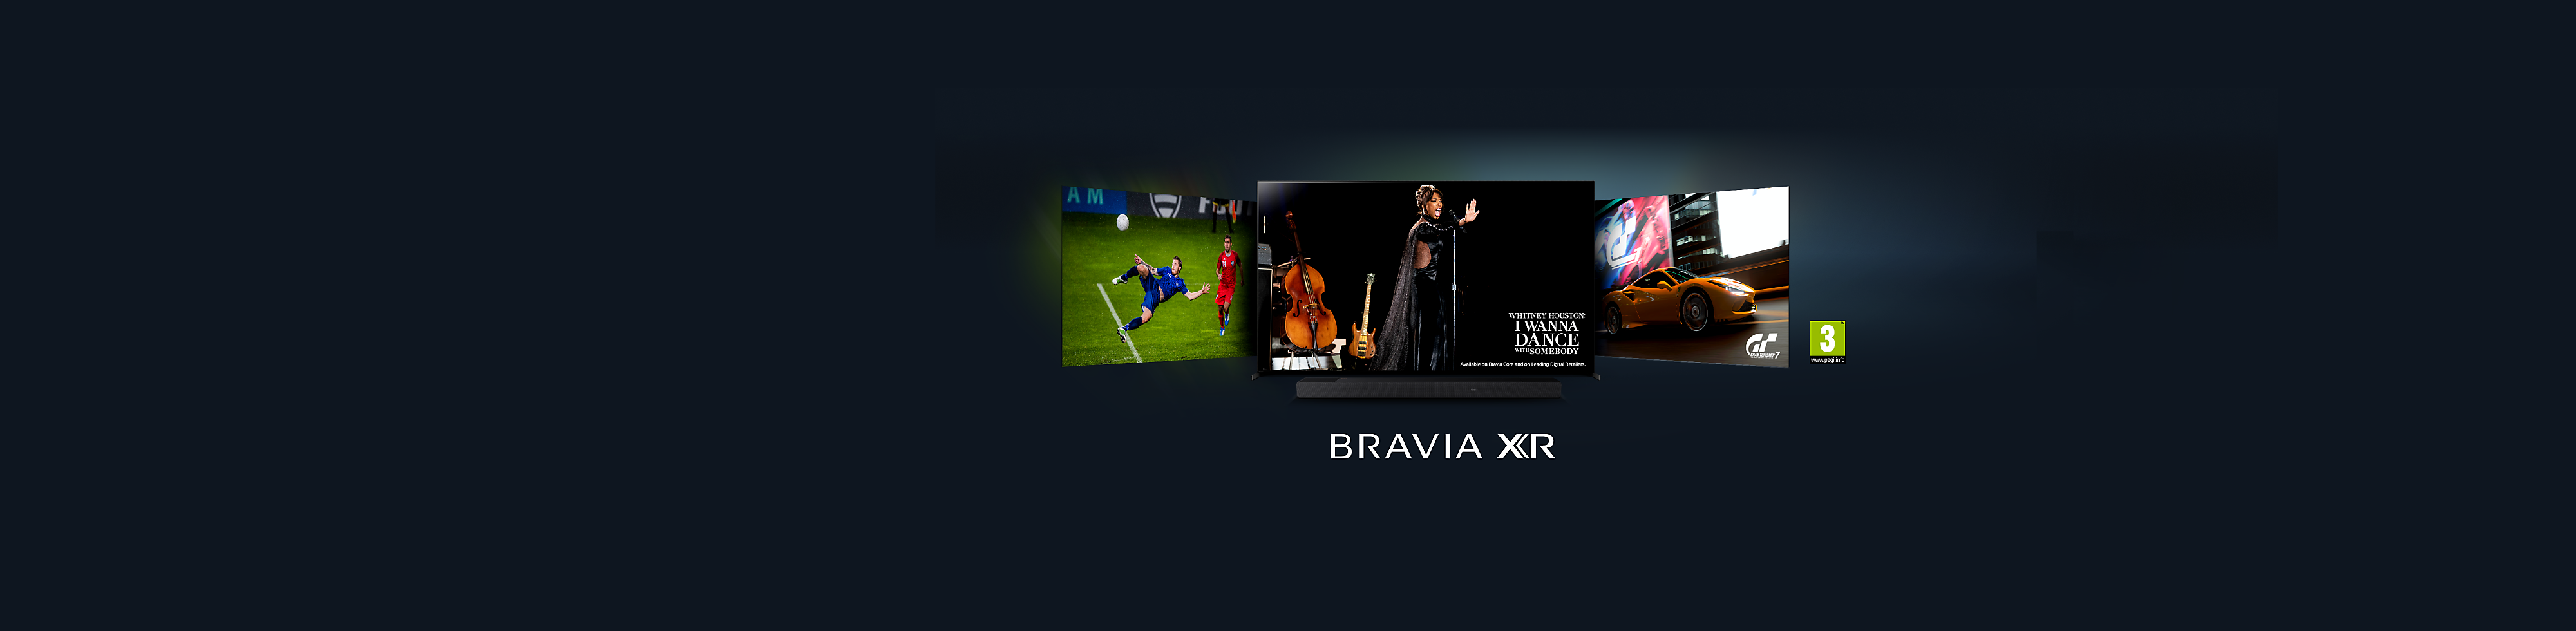 Koe uusi BRAVIA XR -TV-valikoima